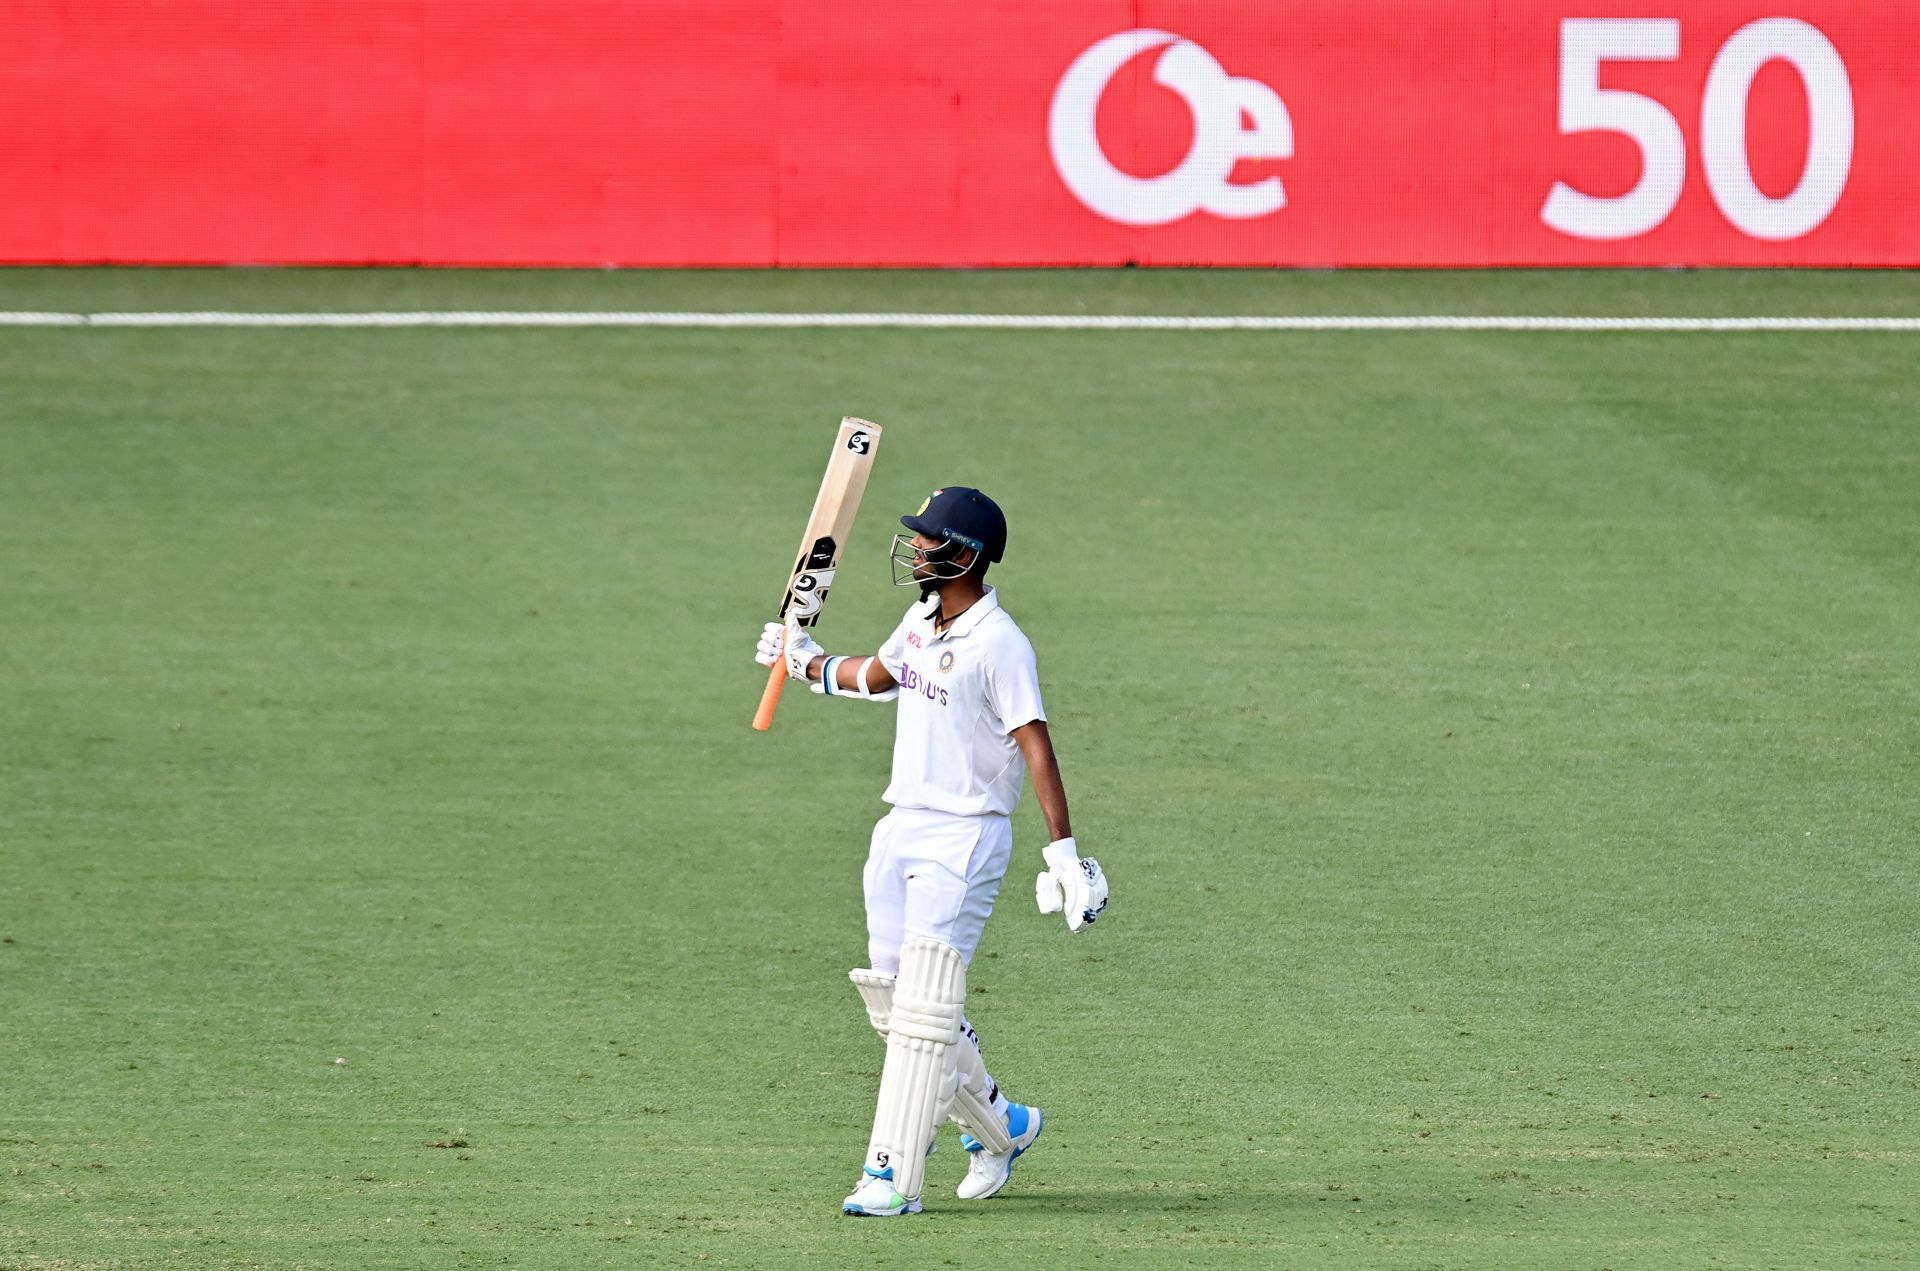 Sundar scored a half-century on debut against Australia